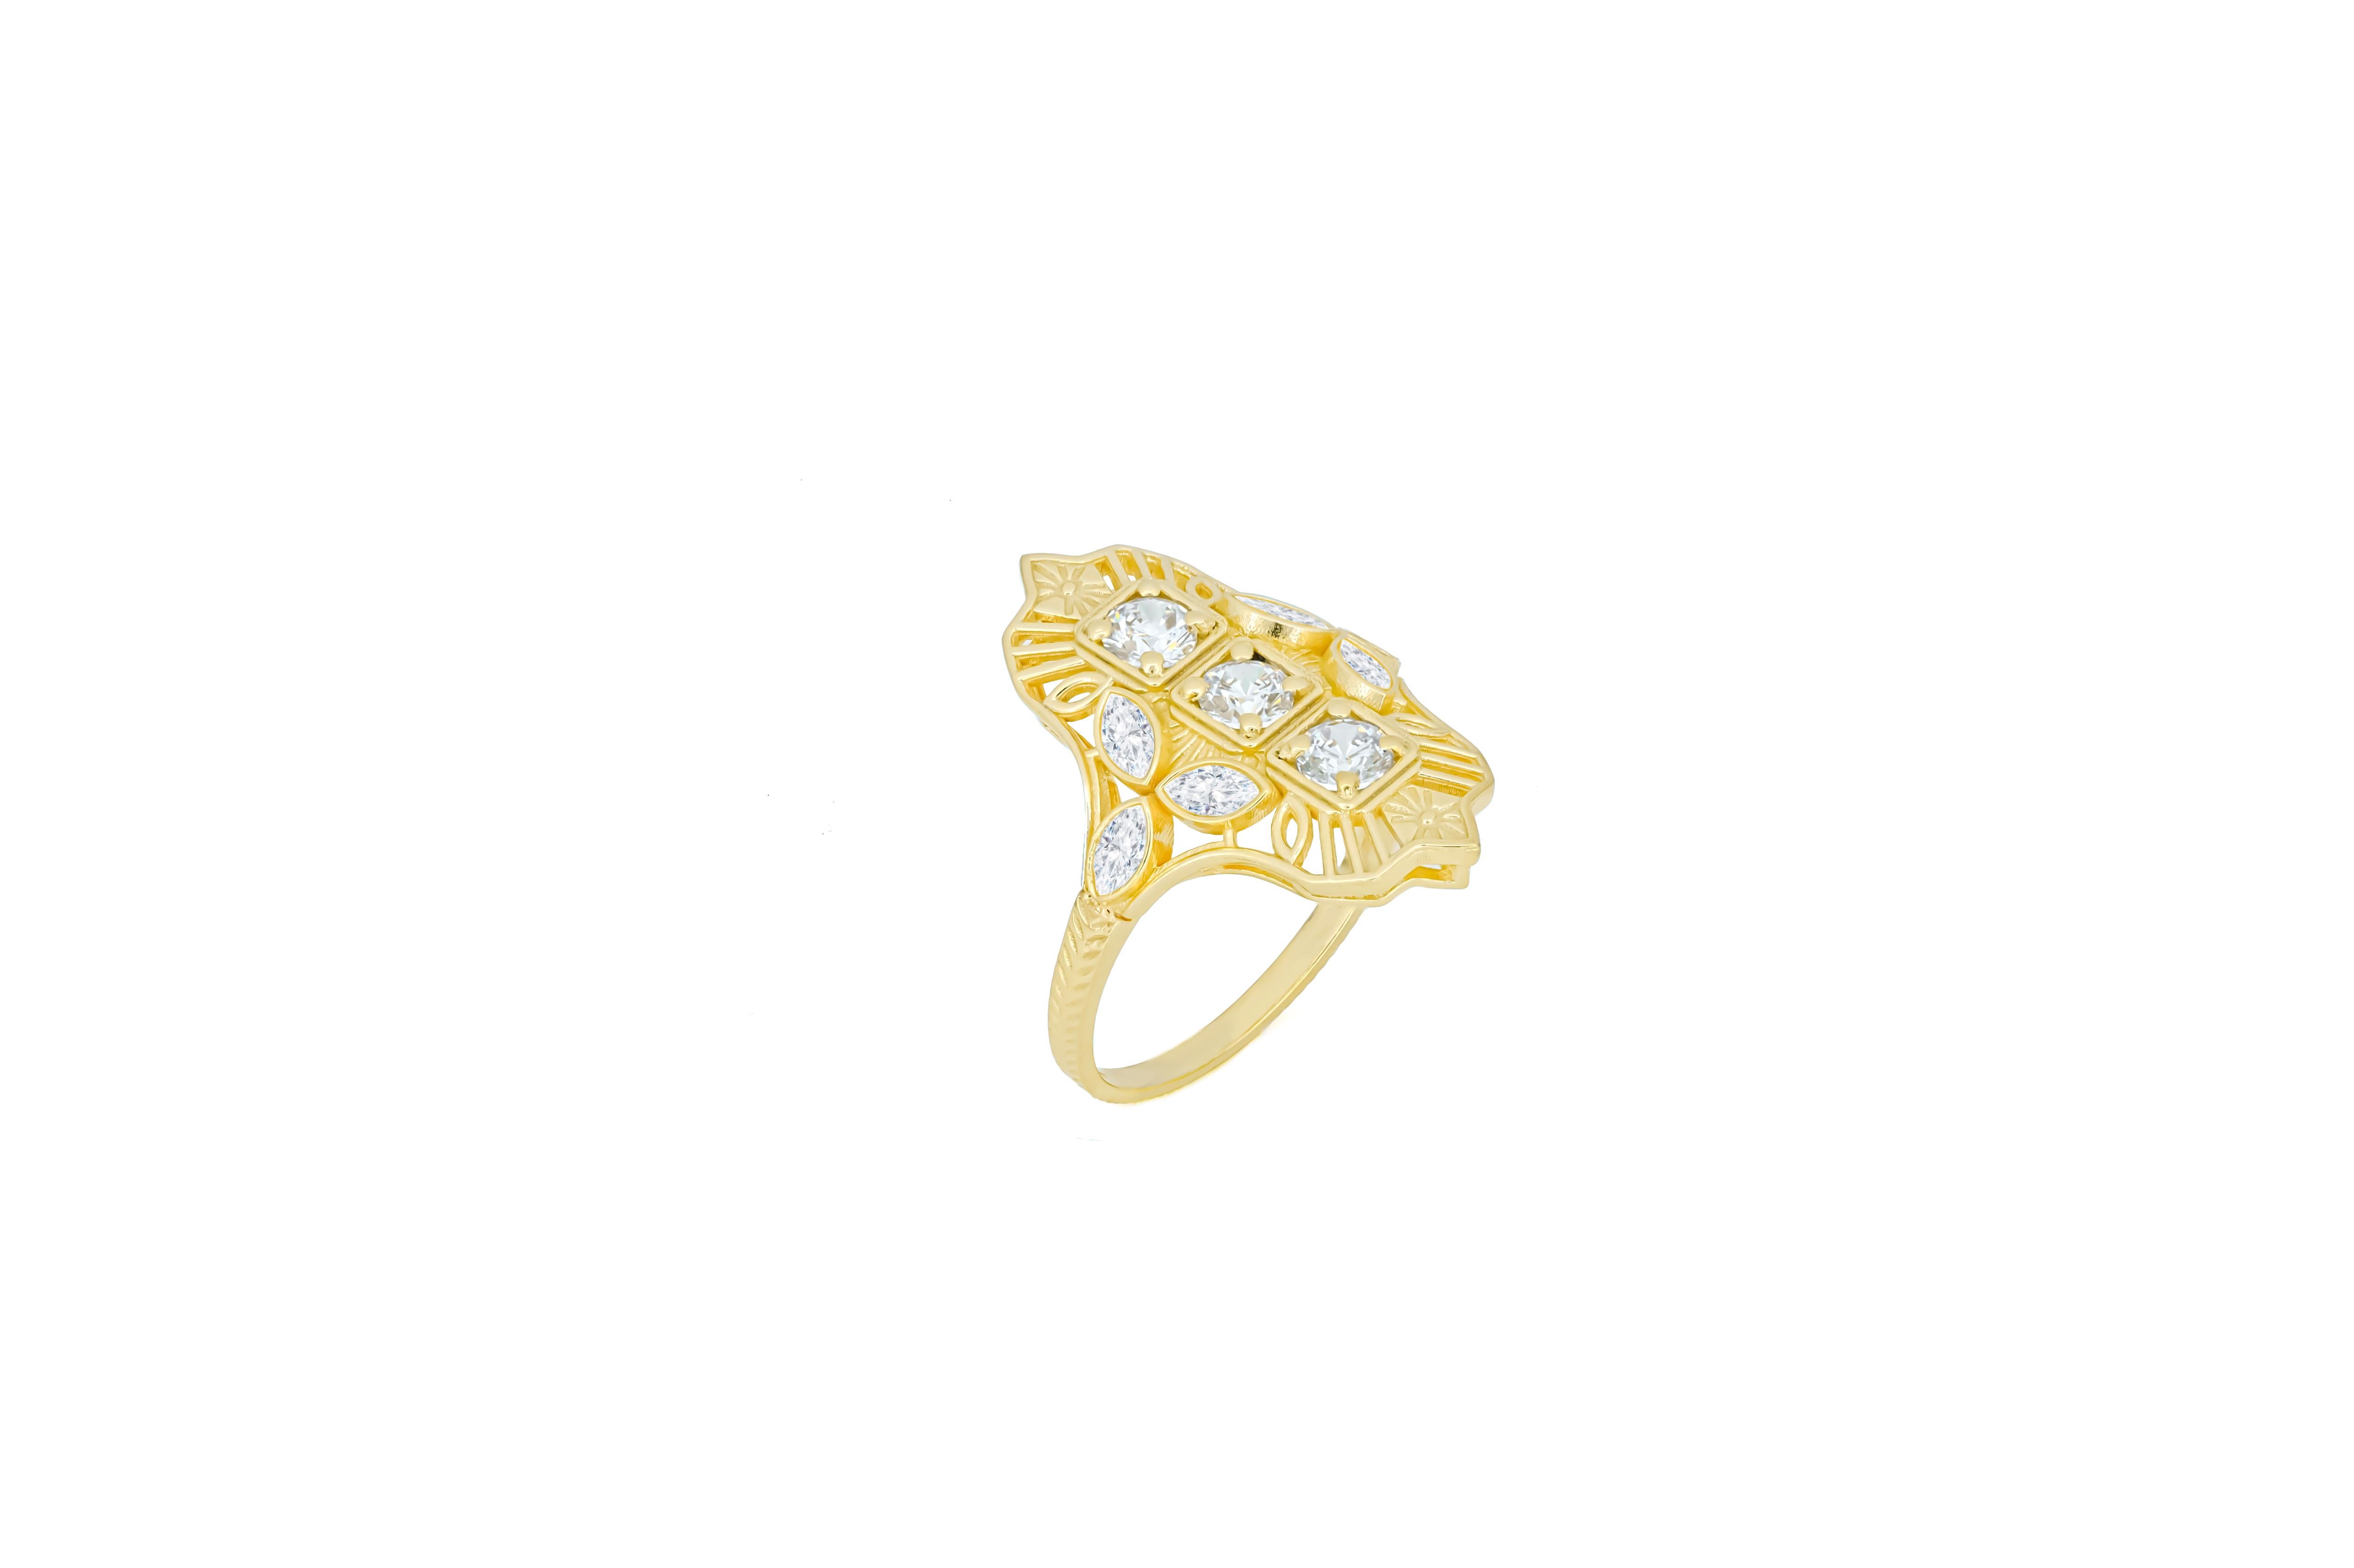 For Sale:  Vintage style moissanite 14k gold engagement ring. 6